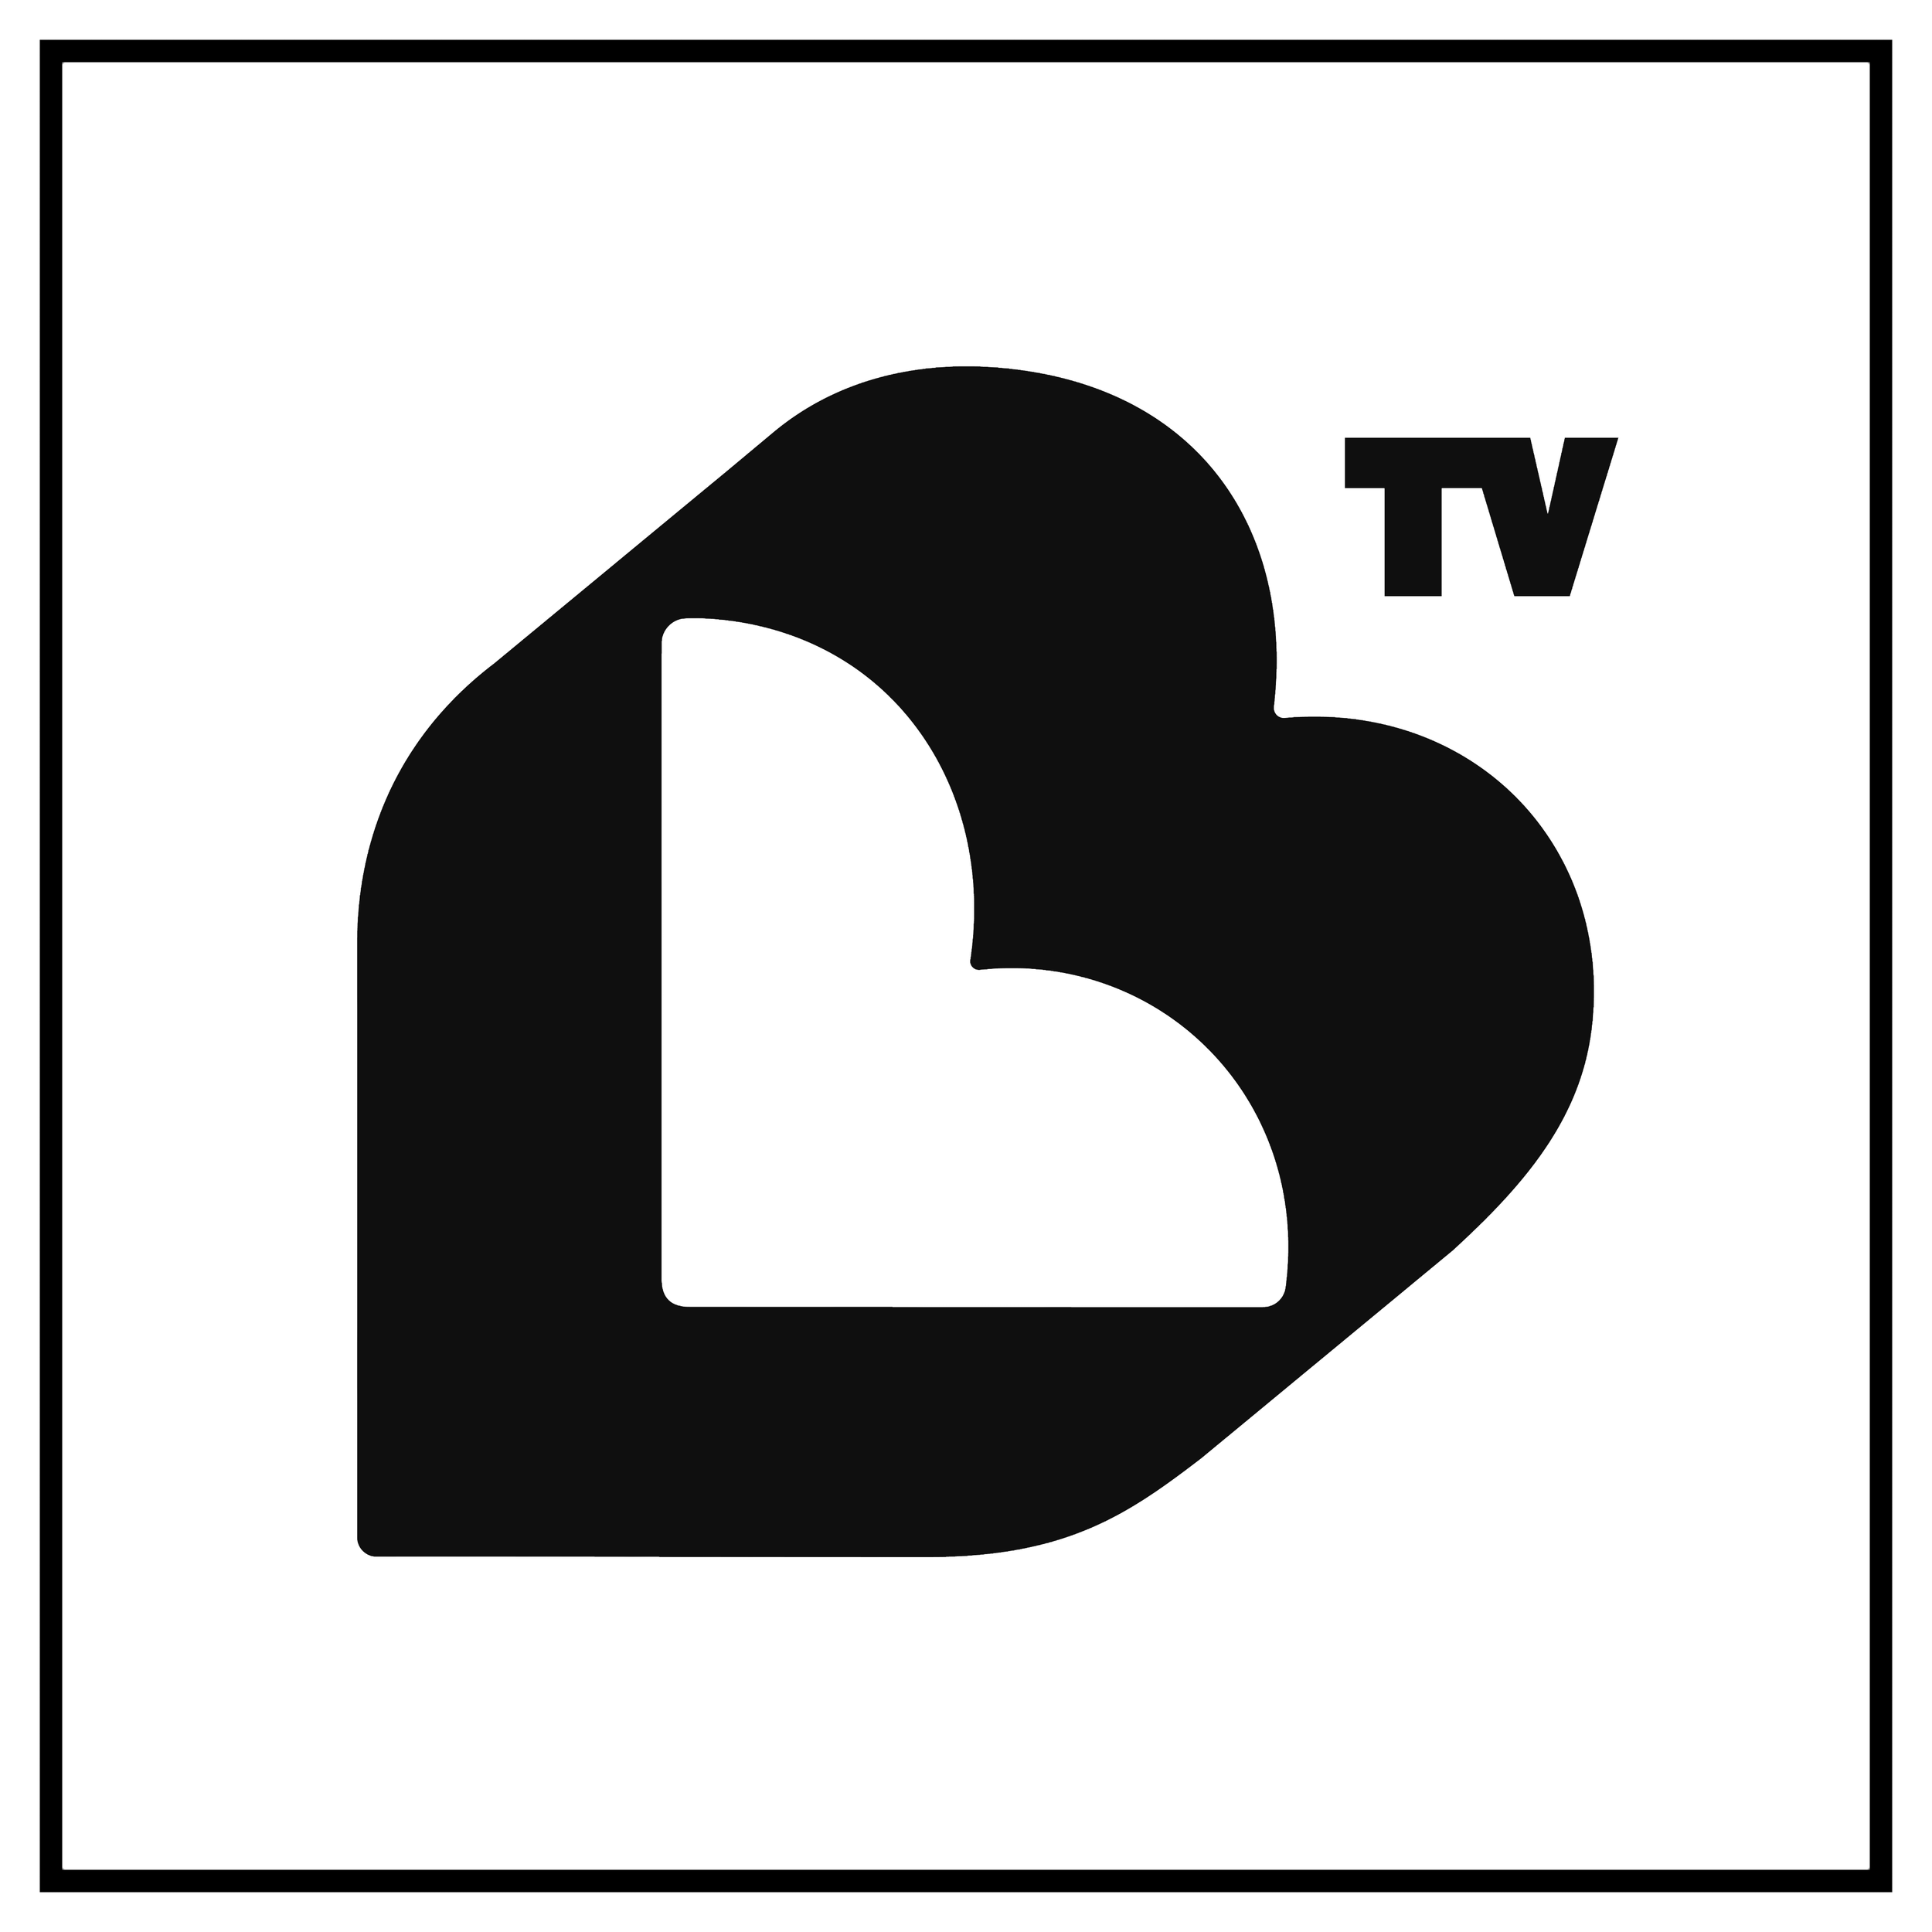 BroadbandTV Logo Option #1.png